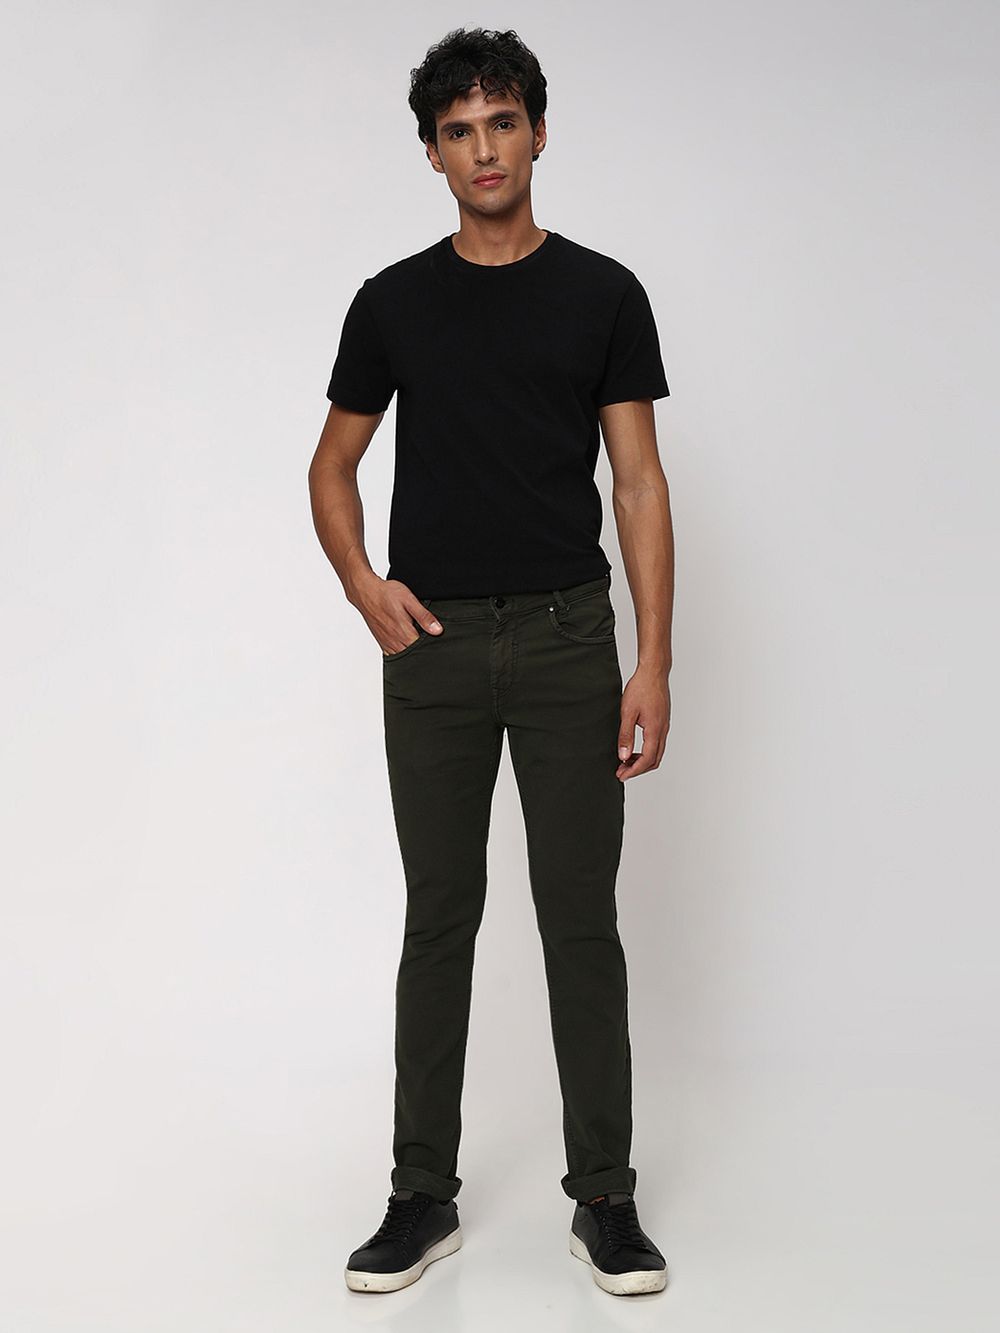 Green Super Slim Fit Superstretch Coloured Jeans